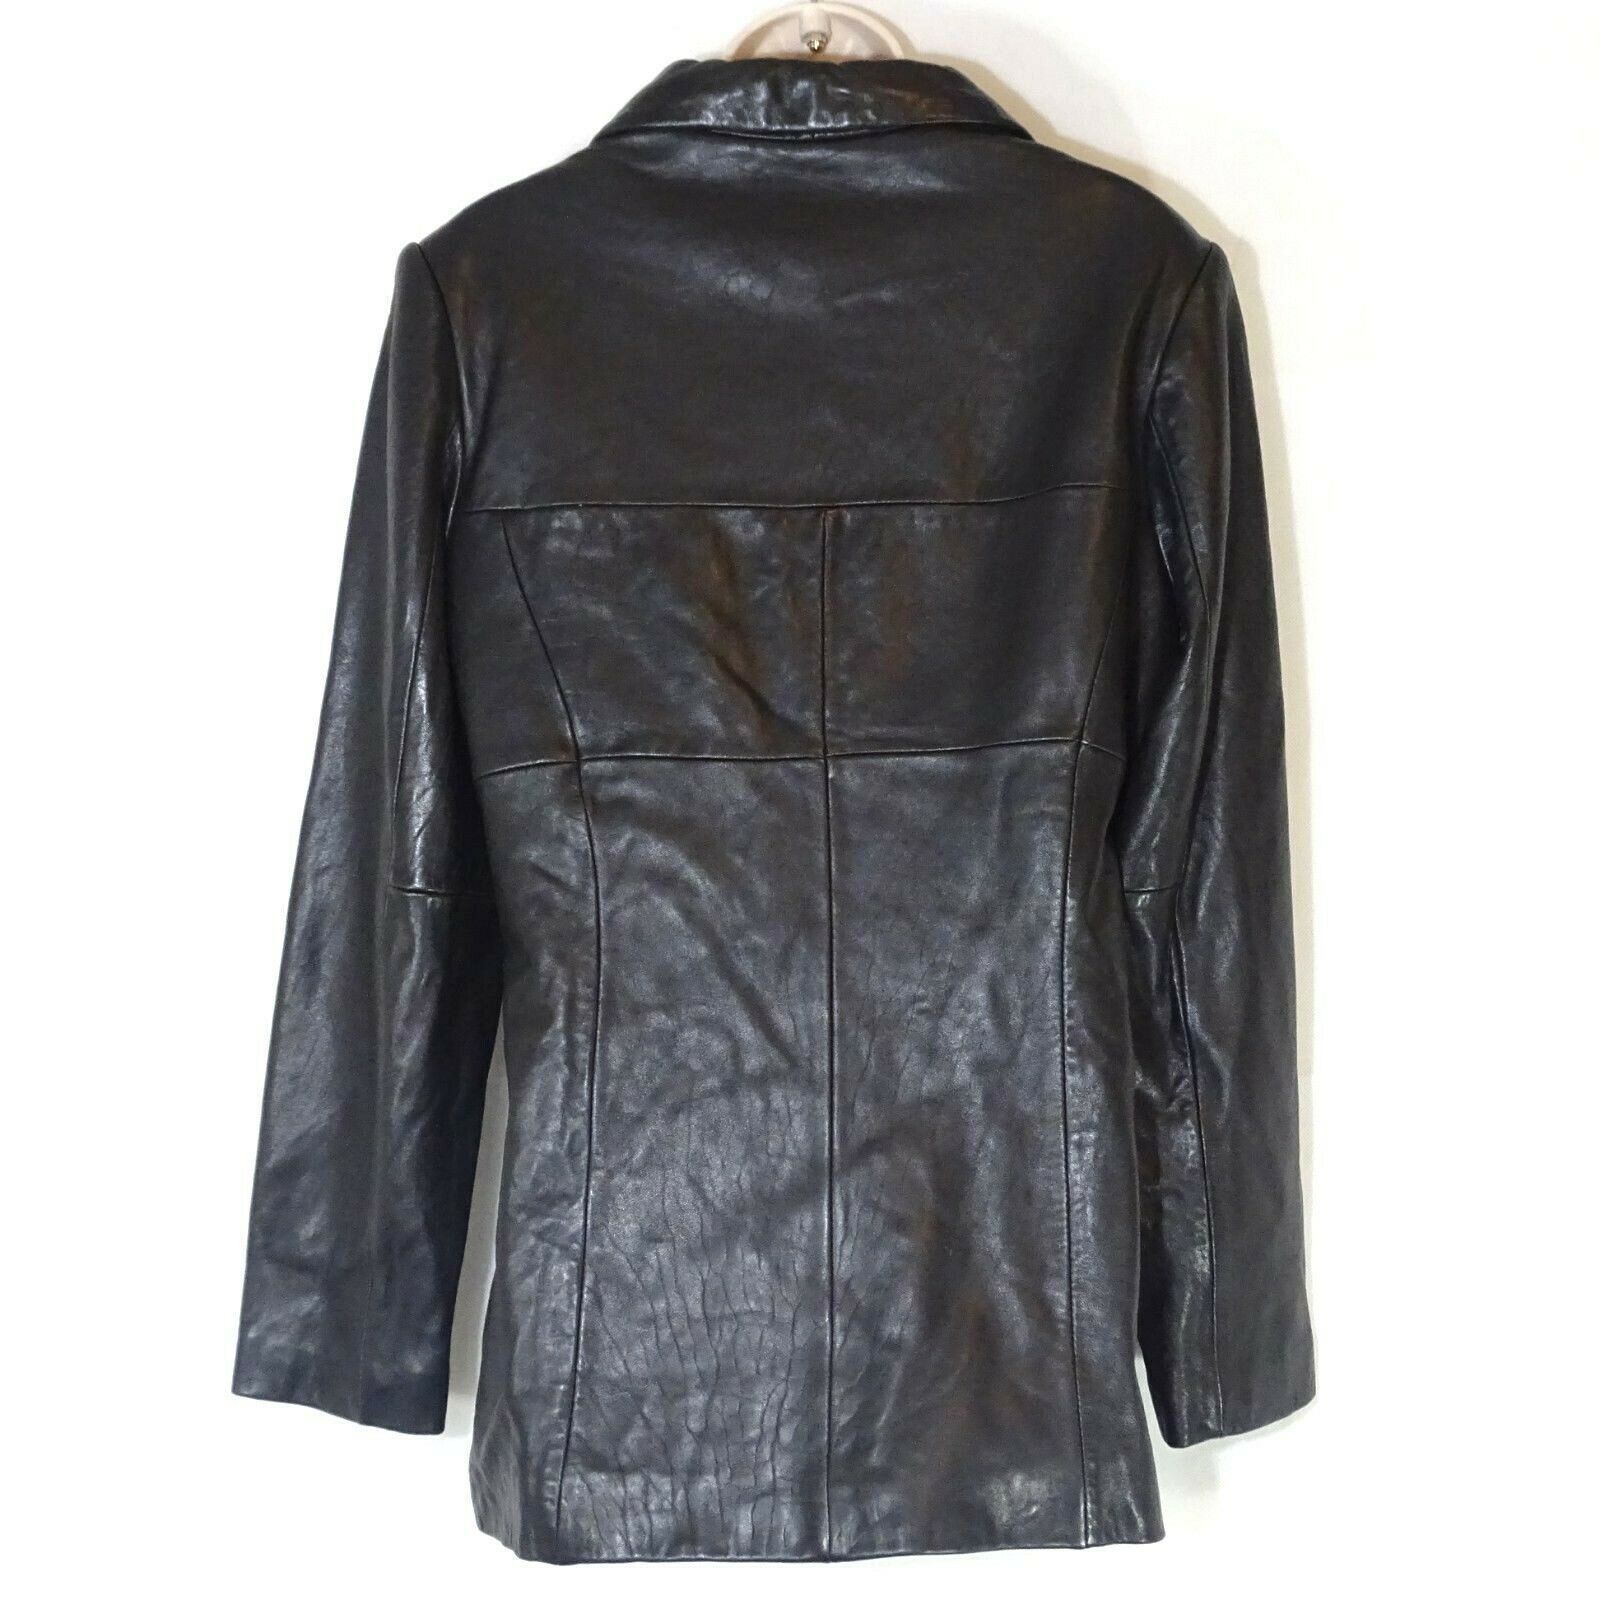 Jones New York Leather Jacket Trench Coat Women Size M Black Button ...